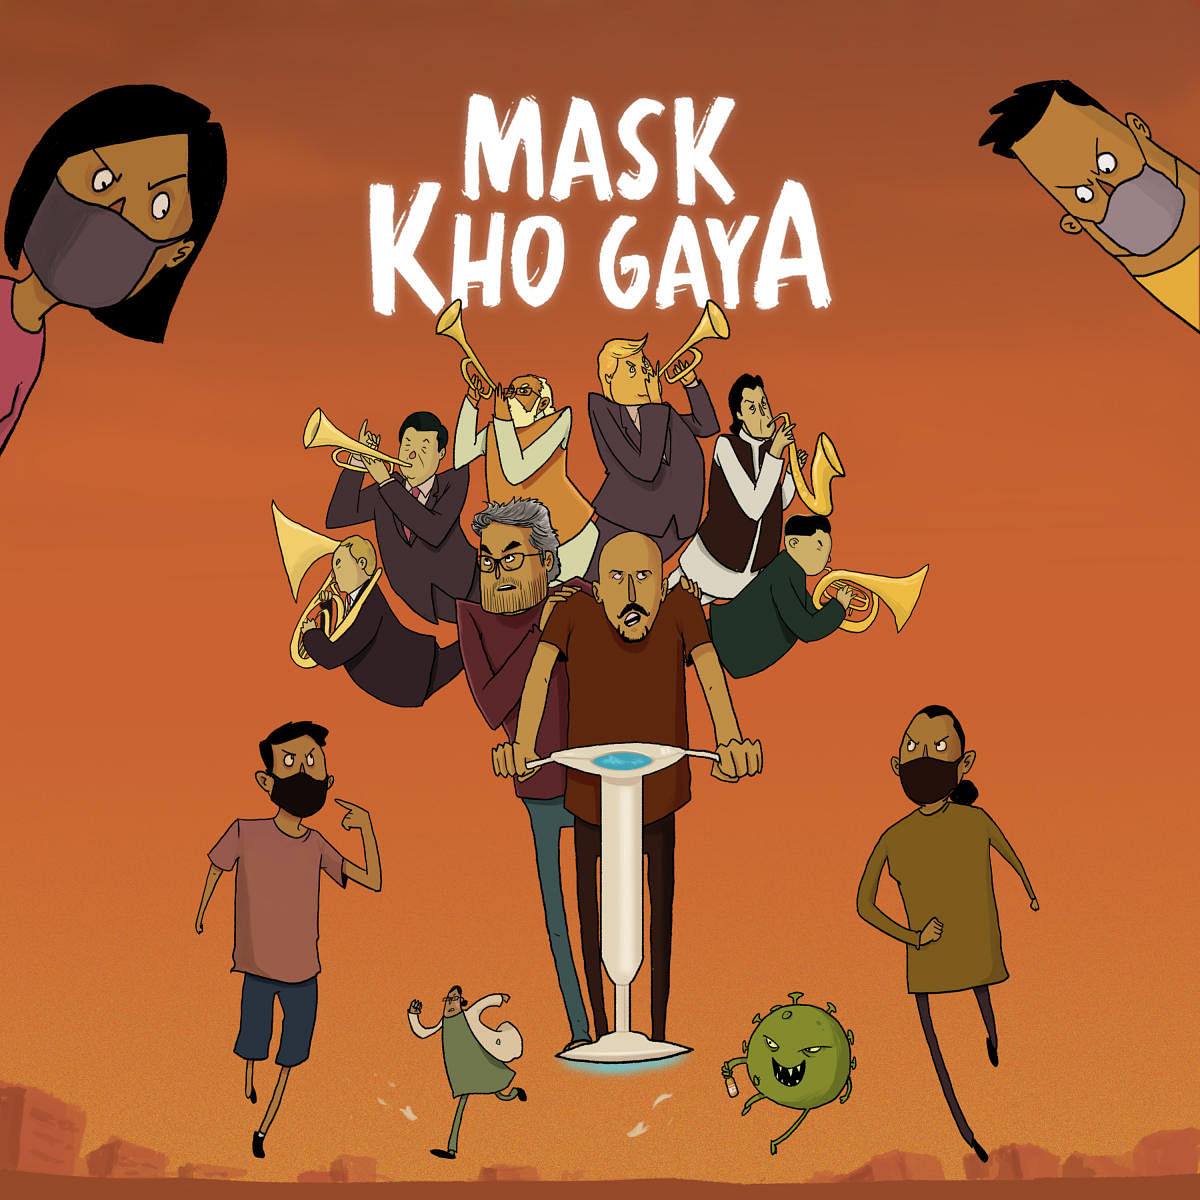 Artwork from the Mask Kho haya music video 